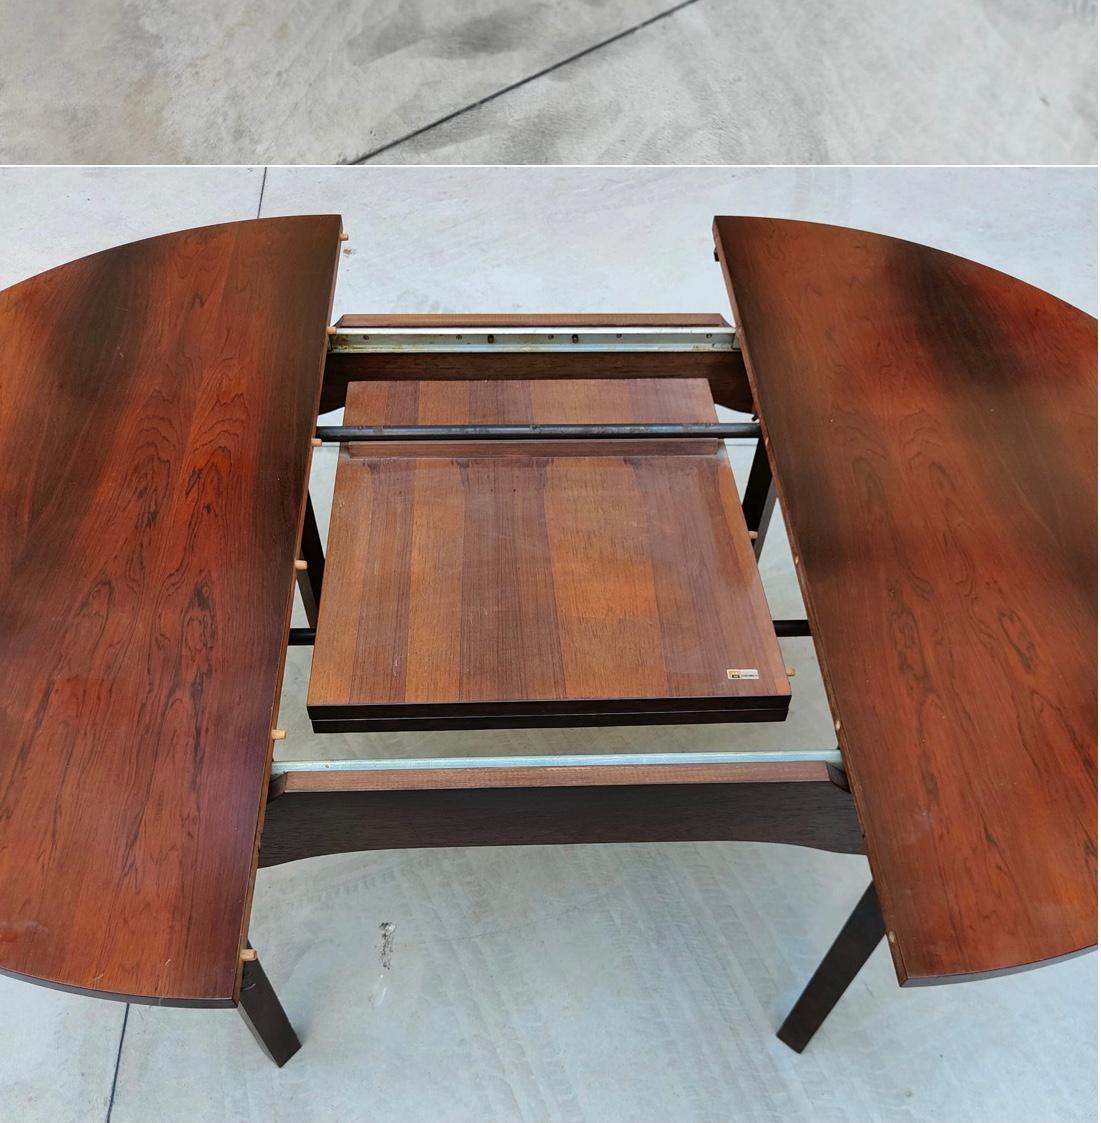 Italian Gianfranco Frattini Extendable Dining Table Wood Iron, 1955, Italy